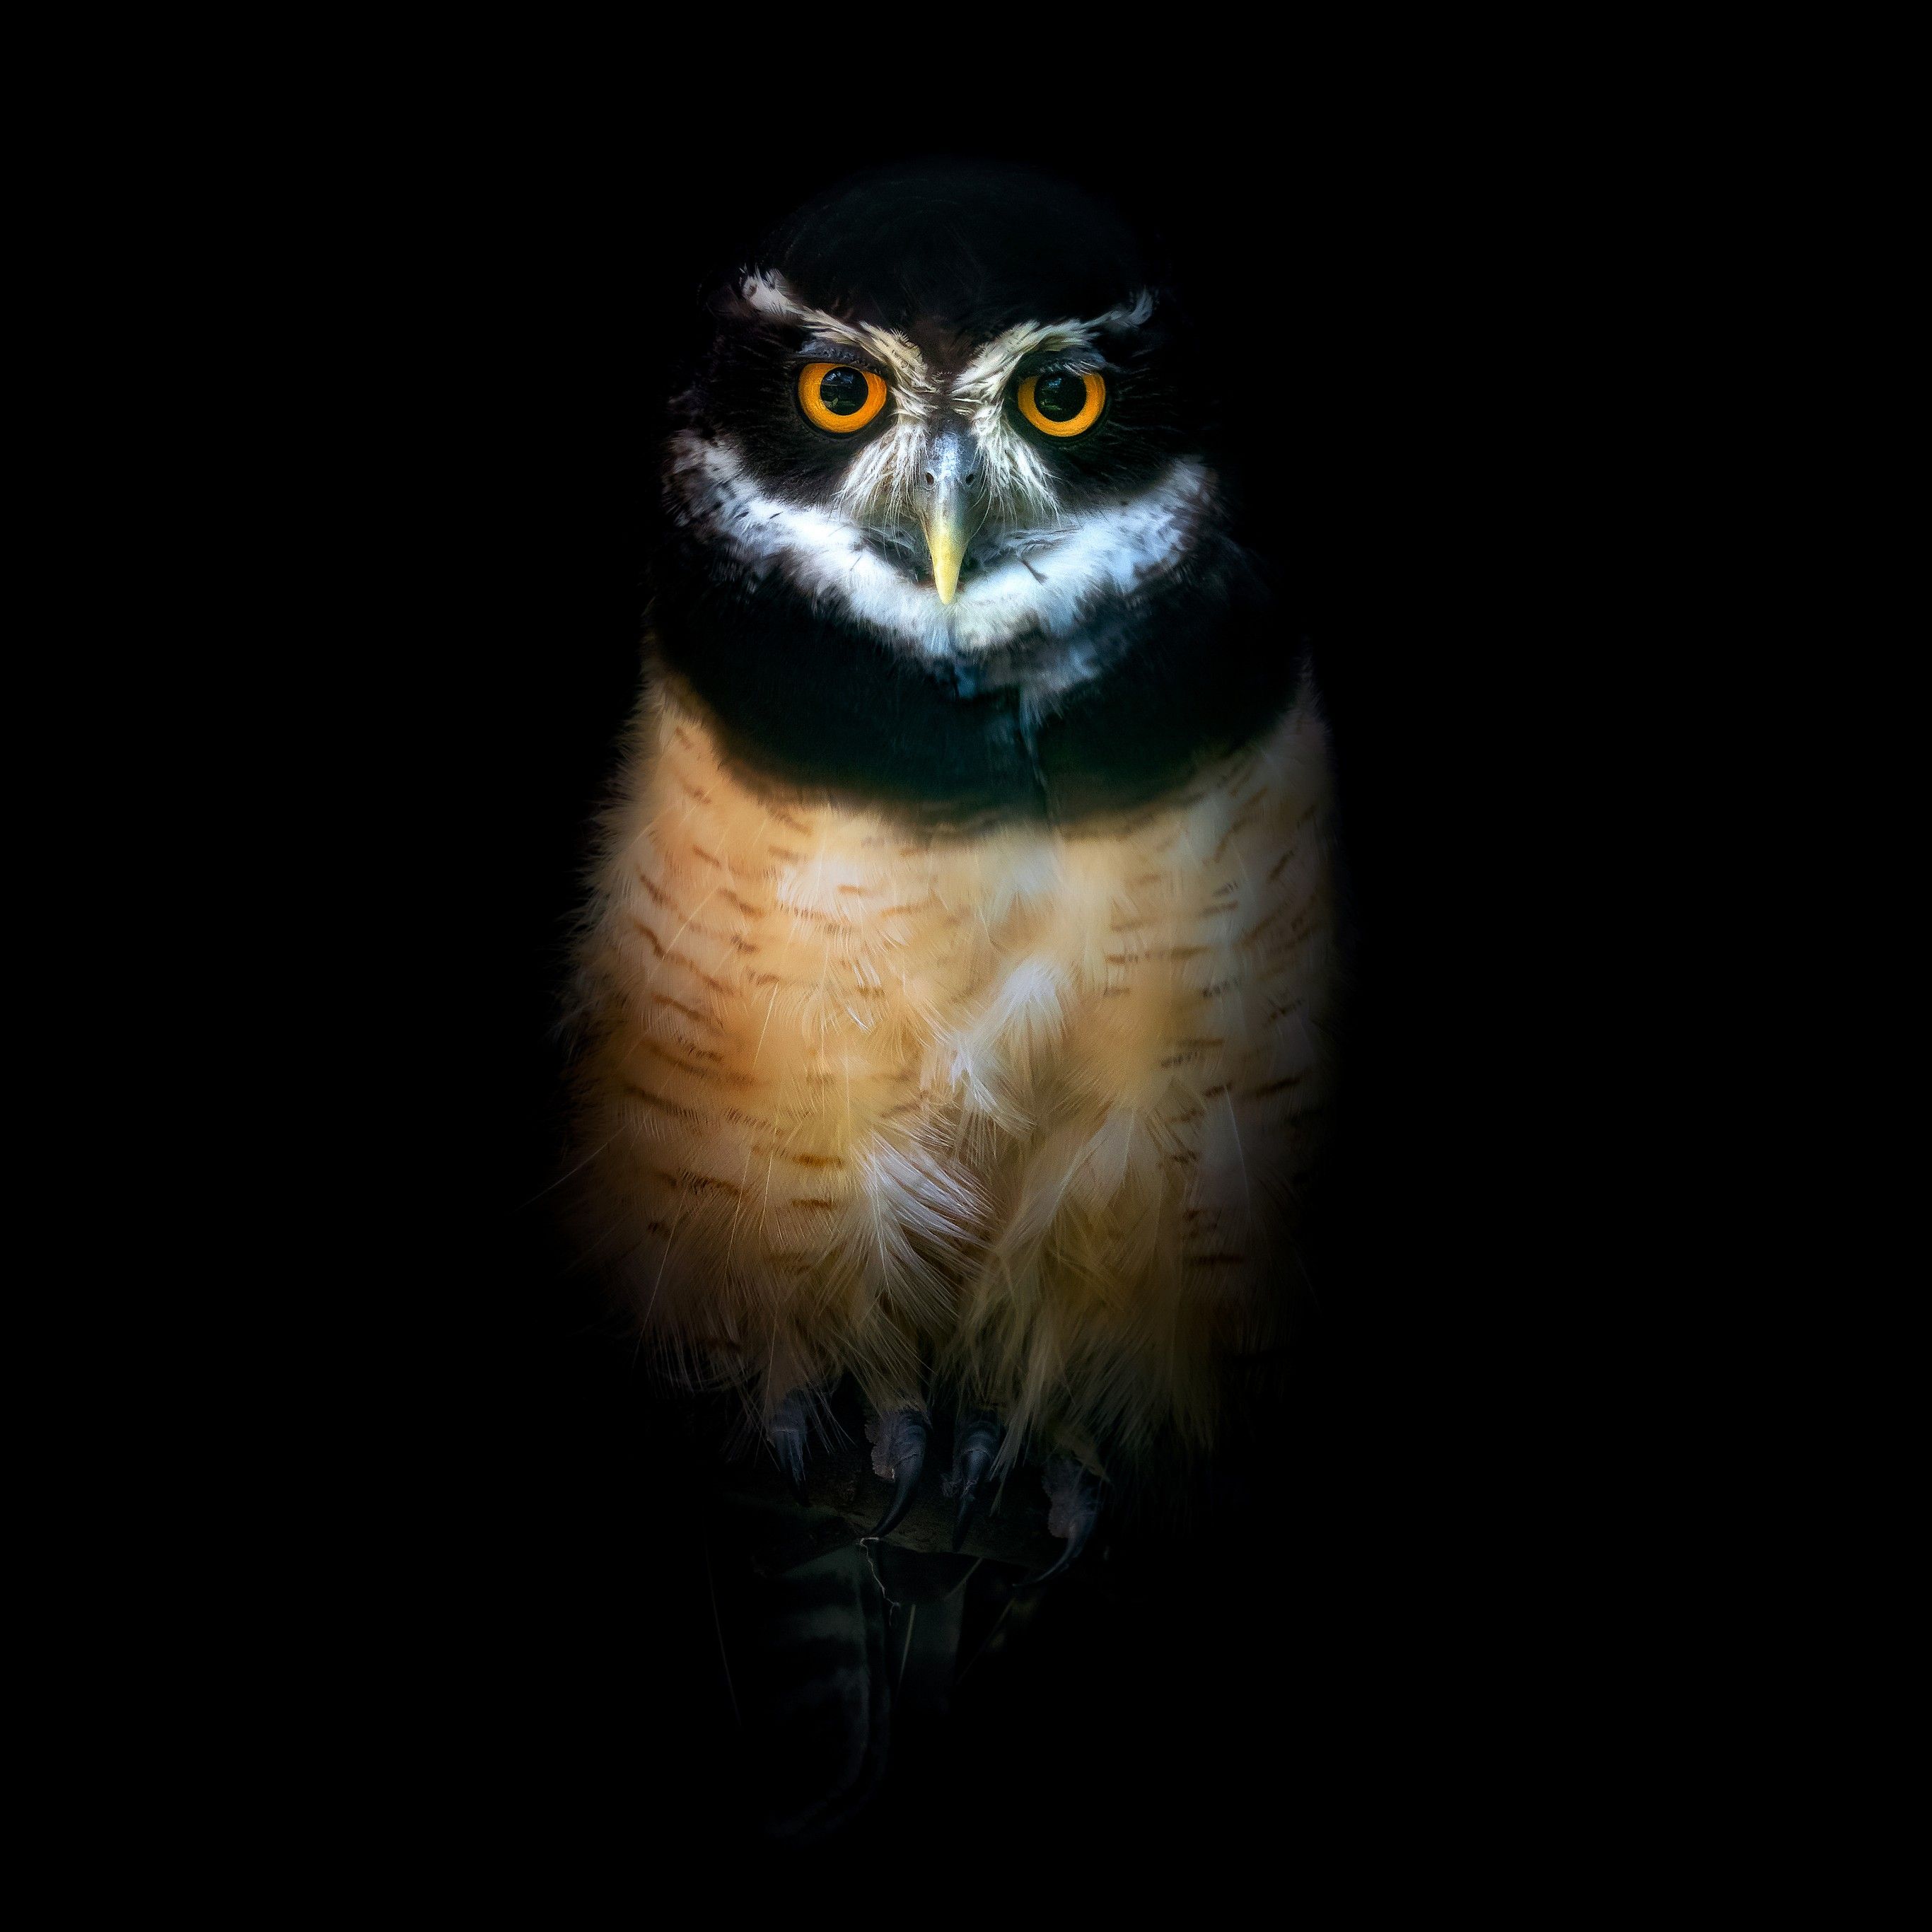 Owl 4K Wallpaper, Night, Wildlife, Black background, 5K, 8K, Animals